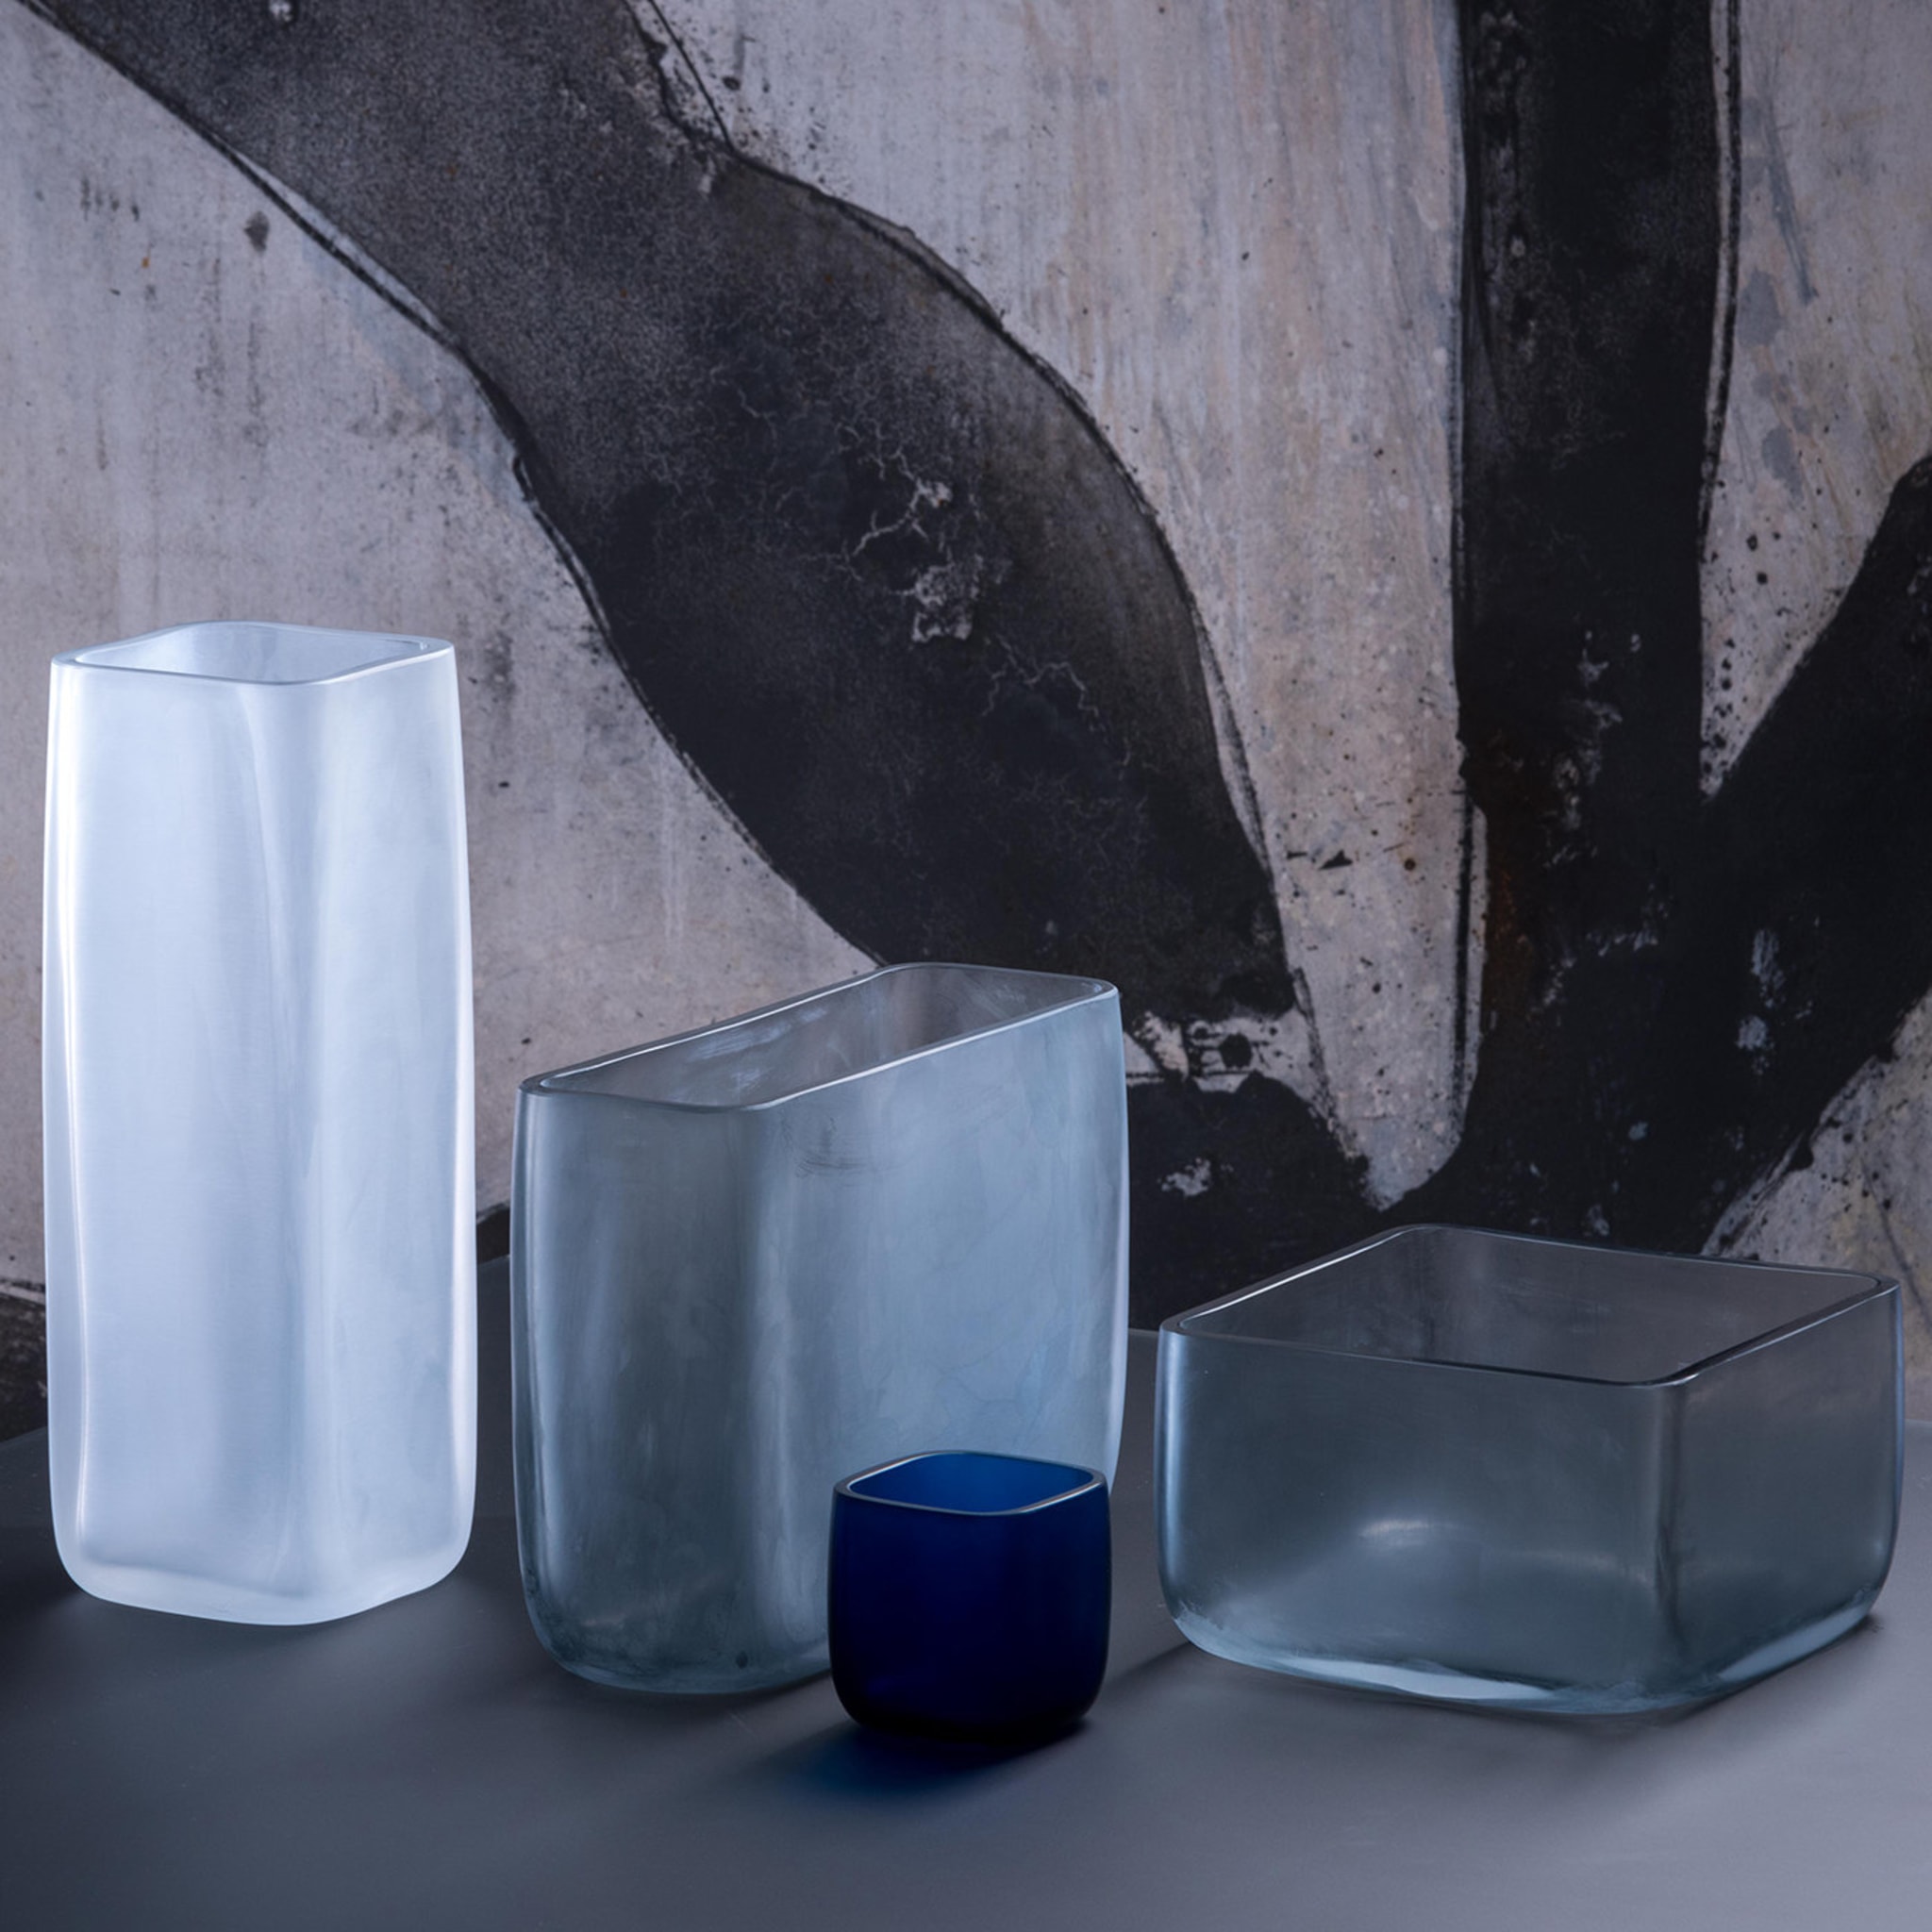 Cubes Ice Crystal Case Vase by LPKW - Alternative view 4